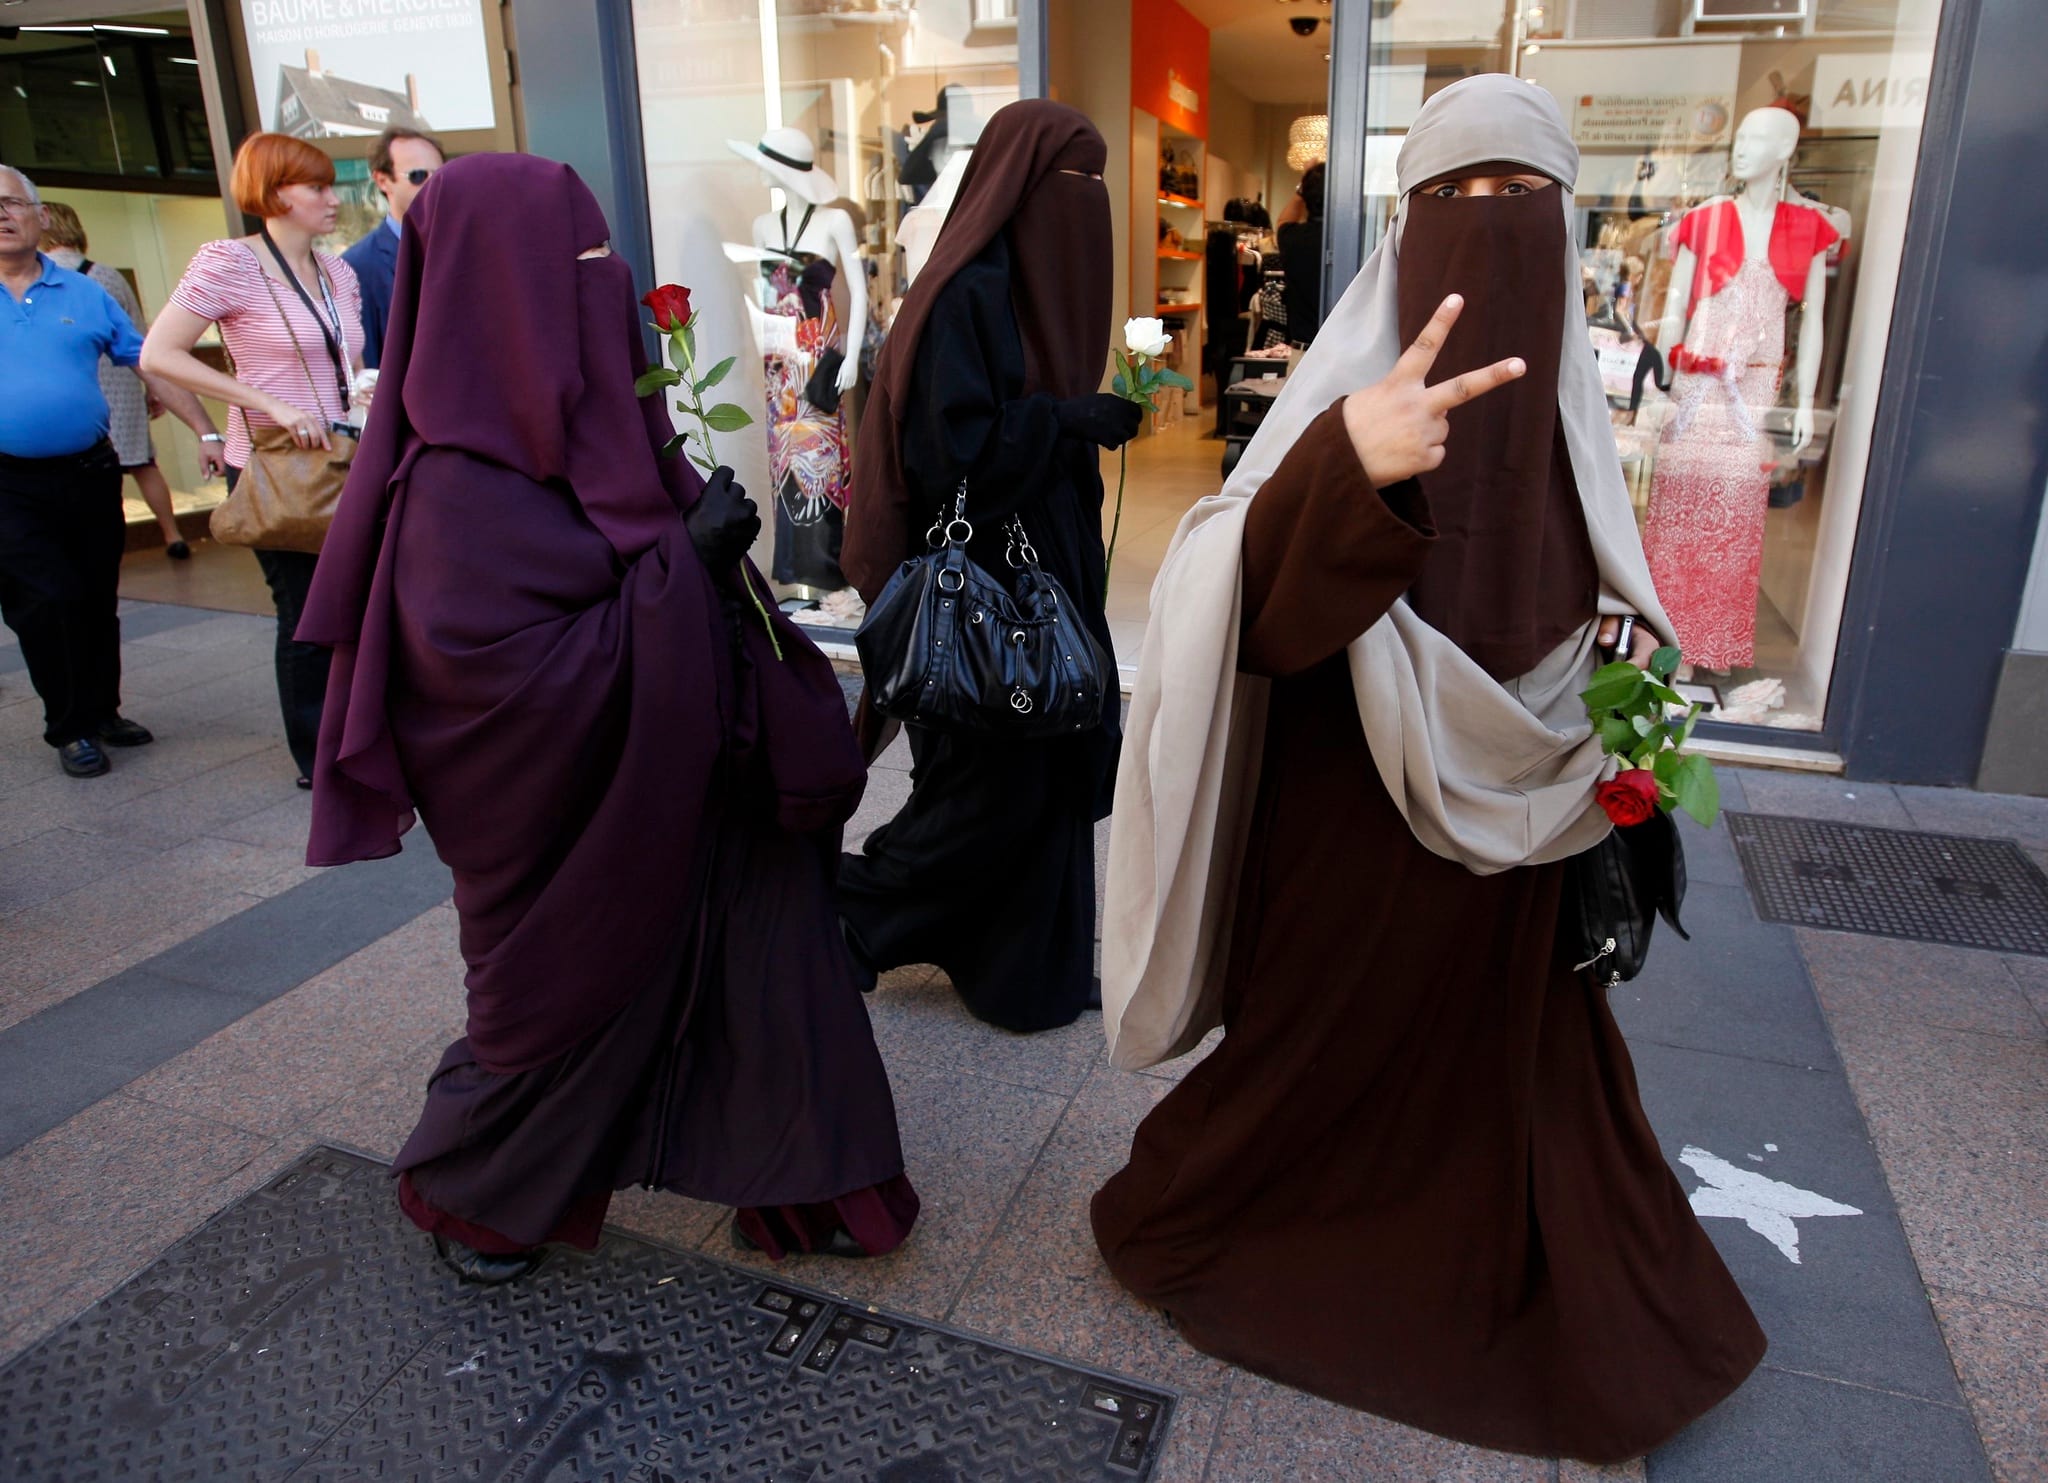 Как ходят мусульмане. Хиджаб паранджа чадра никаб. Бурка одежда женская мусульманская. Никаб в Исламе. Хиджаб паранджа чадра никаб отличия.